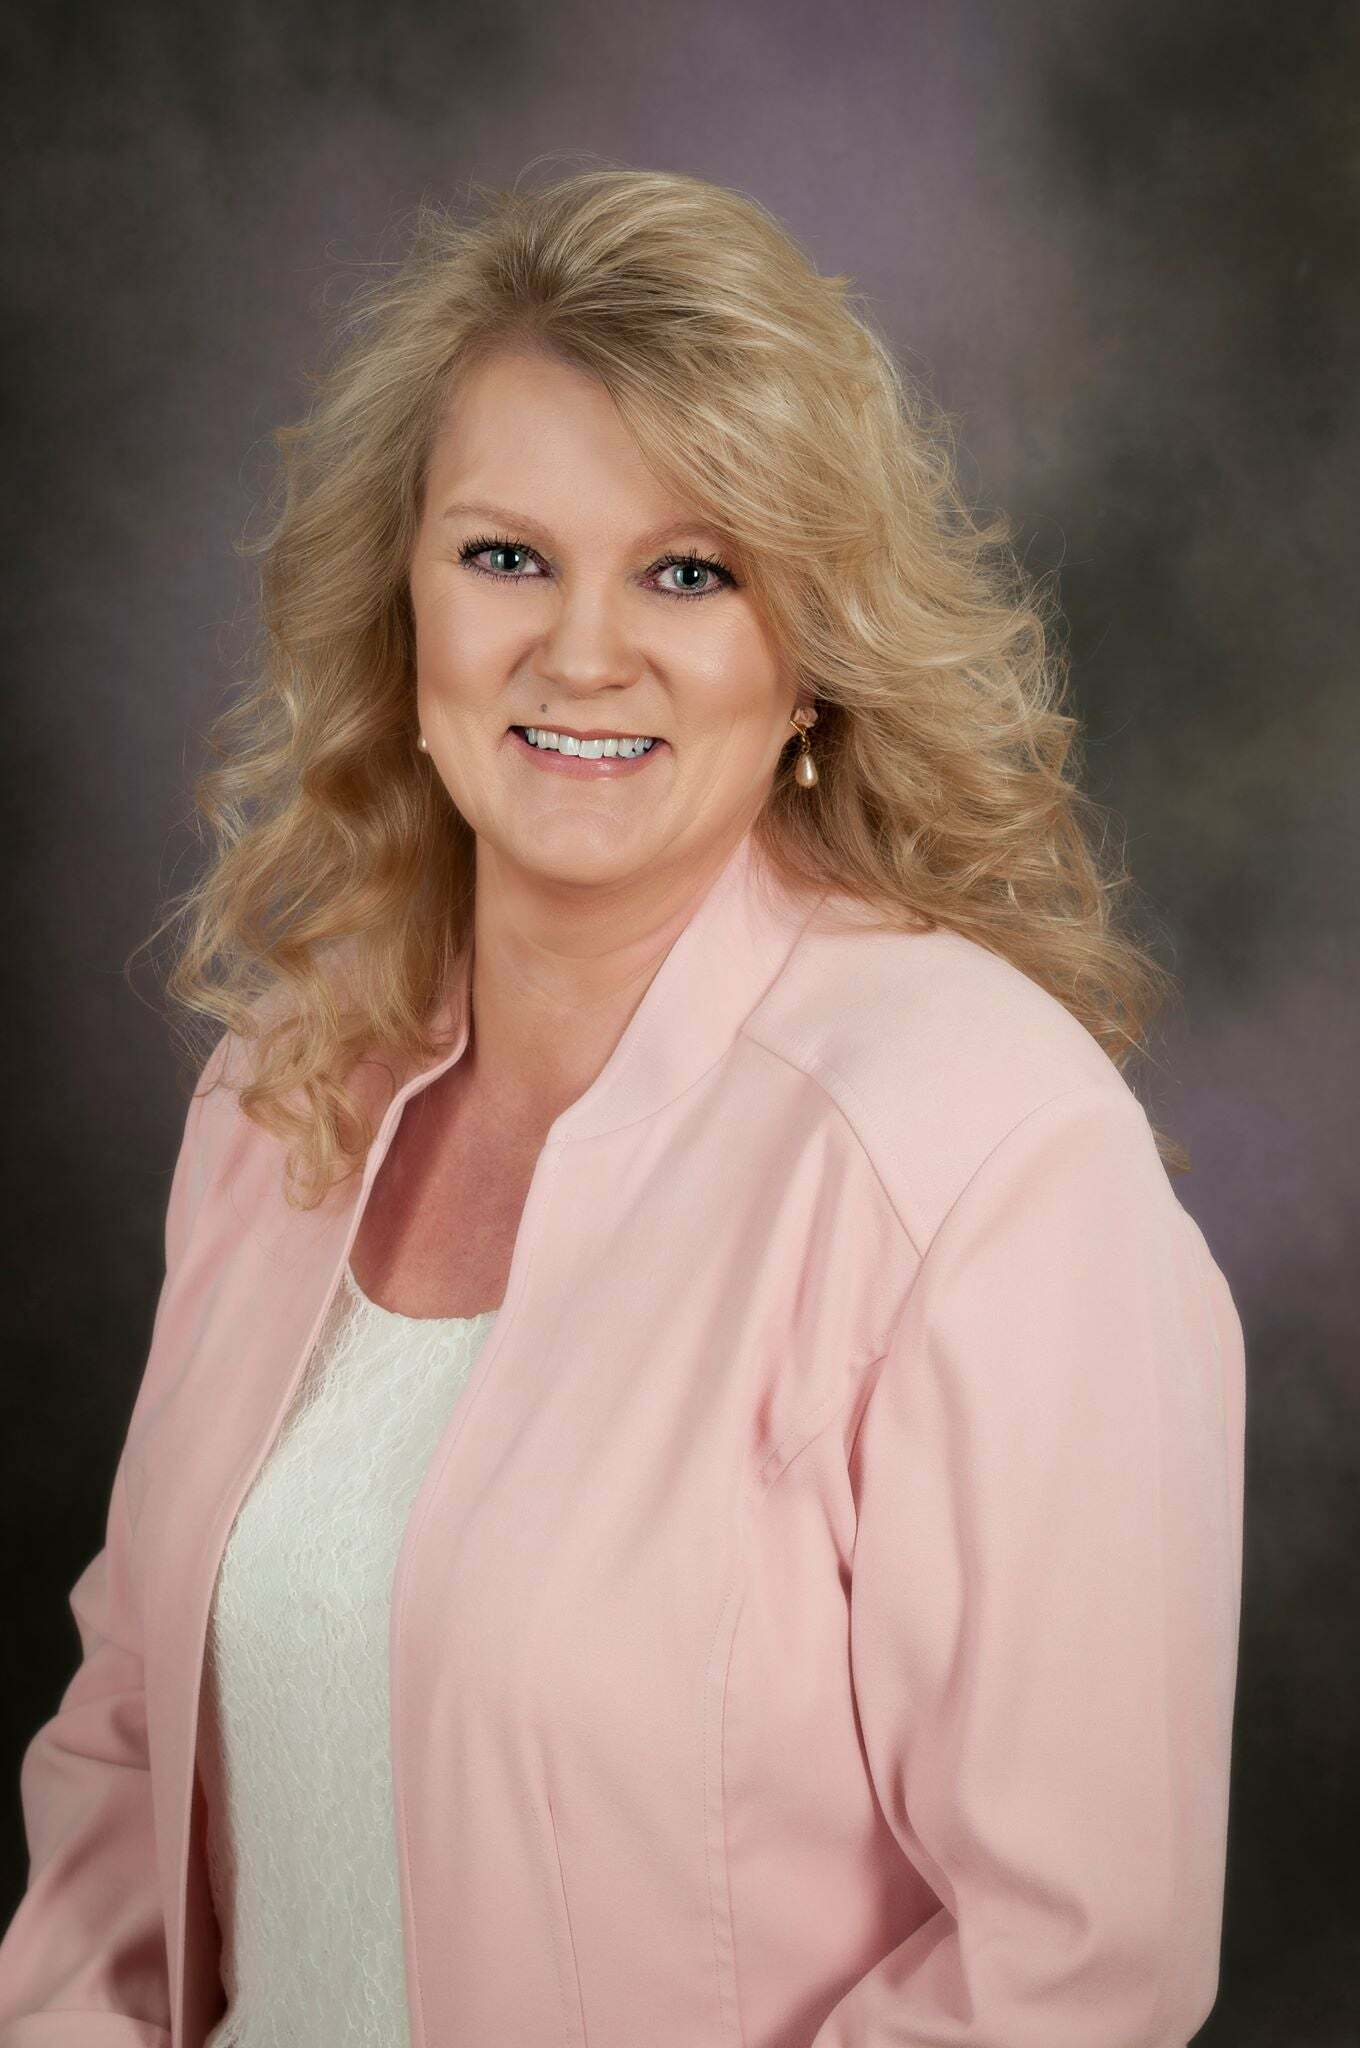 Teresa McCarrel, Real Estate Salesperson in Cheyenne, The Property Exchange